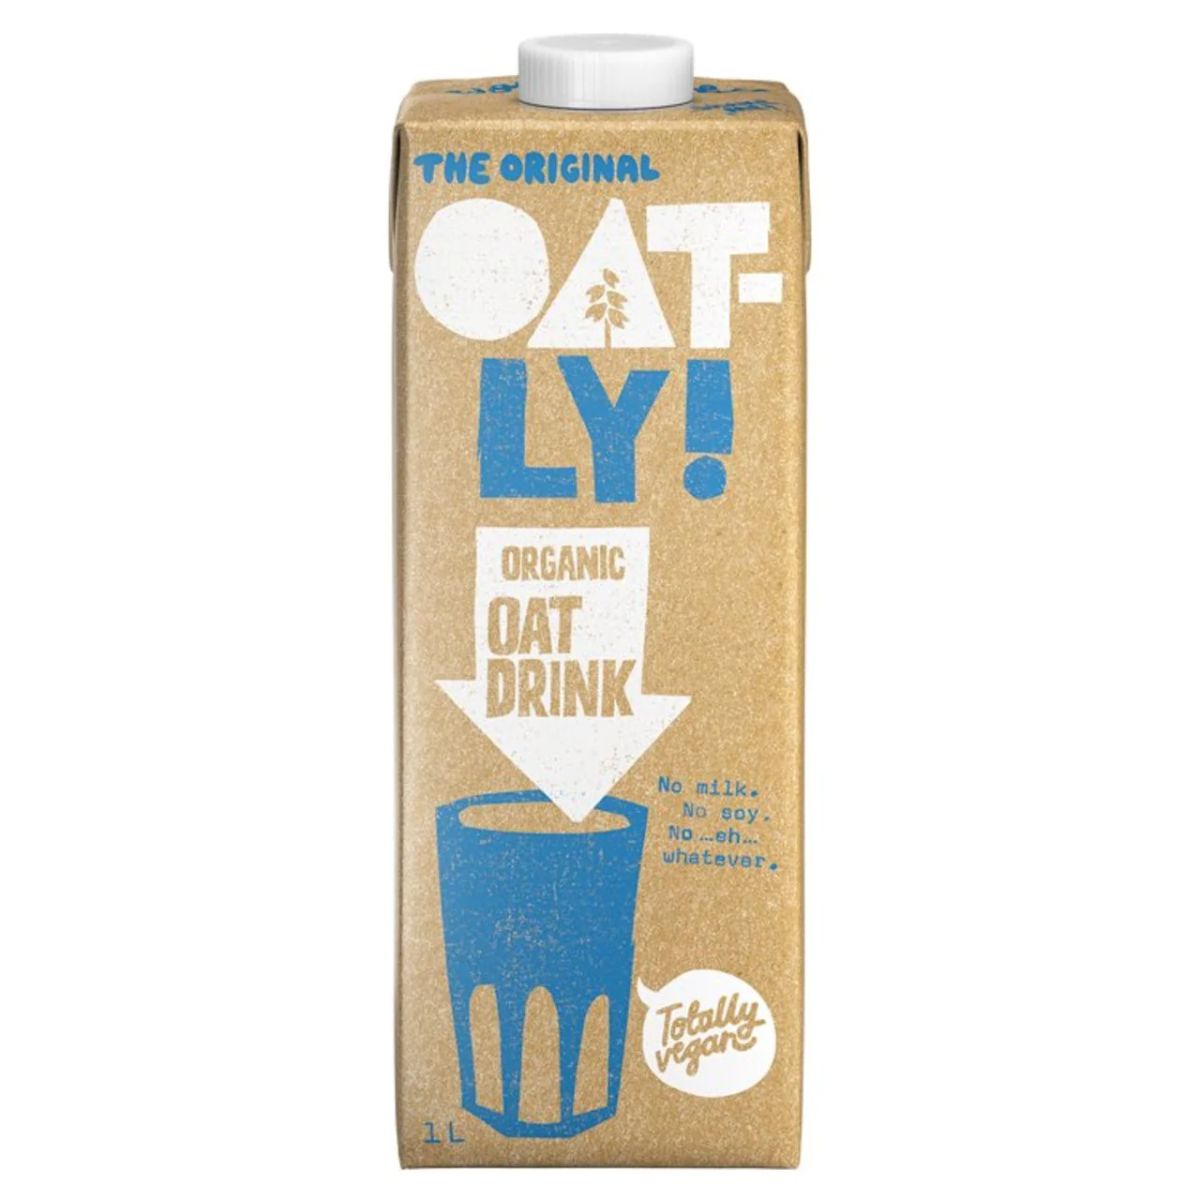 A carton of Oatly - Dairy Free Organic Oat Drink - 1L.